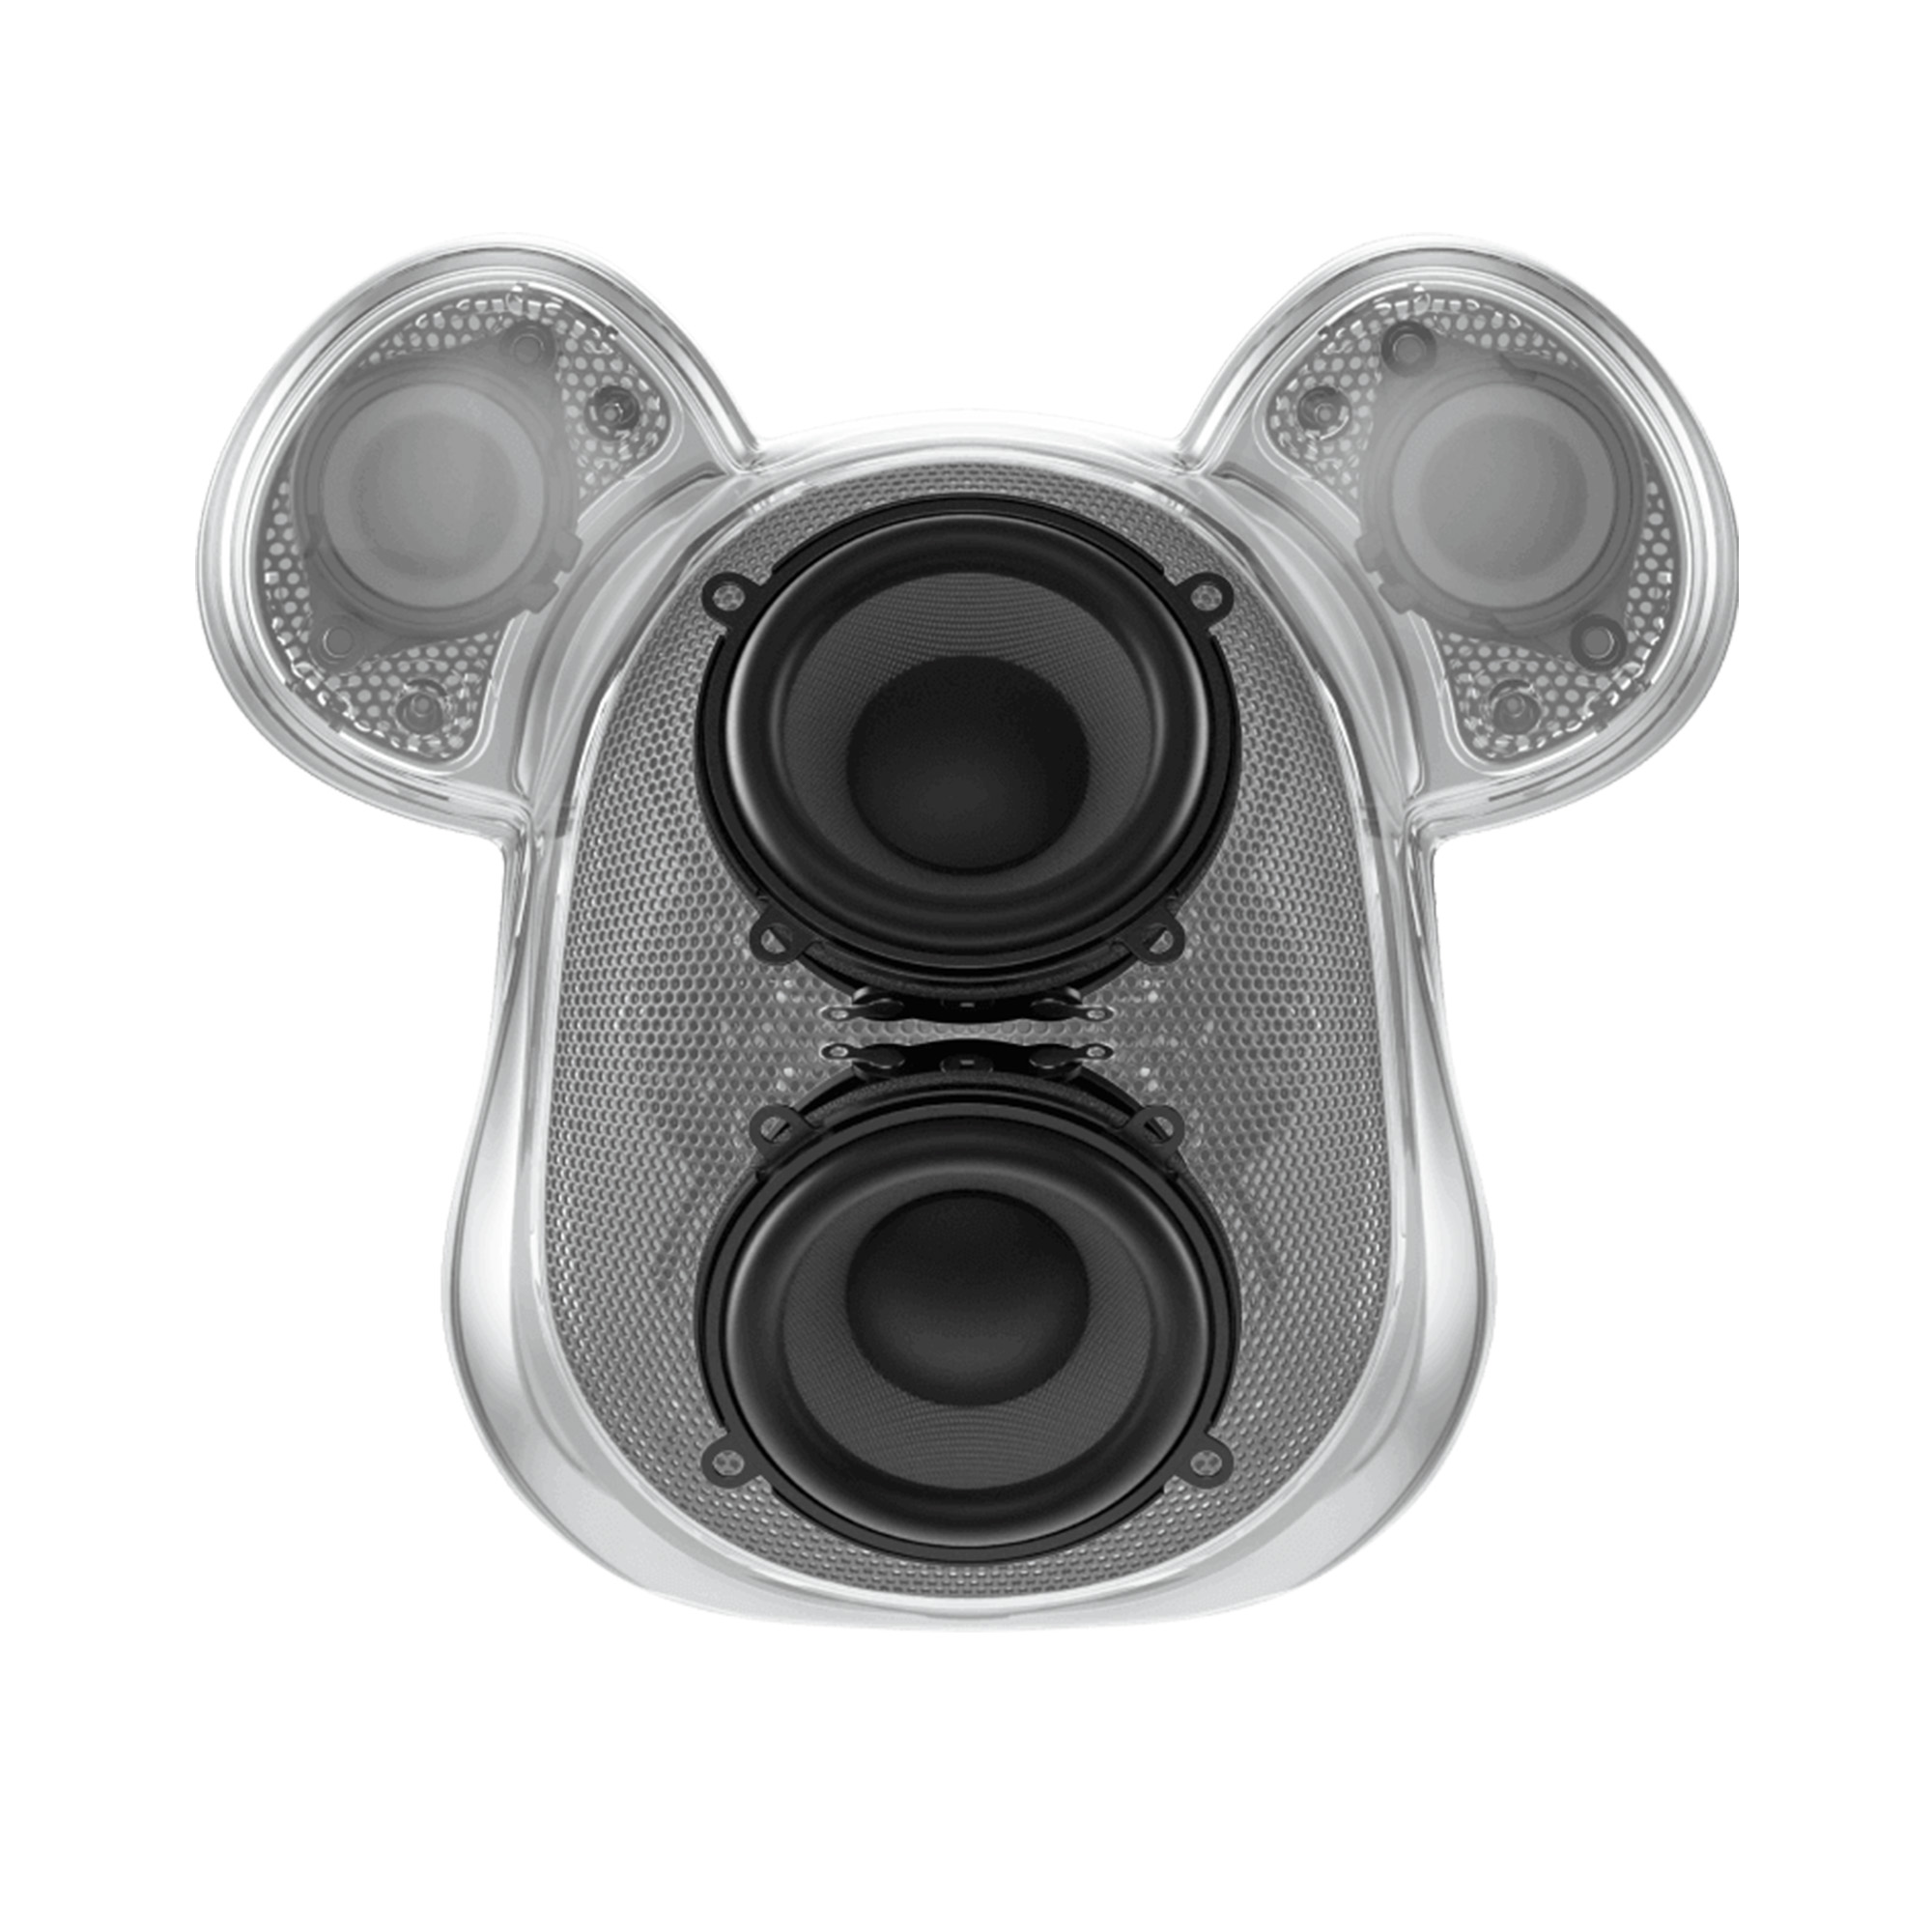 Buy BE@RBRICK AUDIO 400% Portable Bluetooth Speaker from Medicom Toy | NO GA